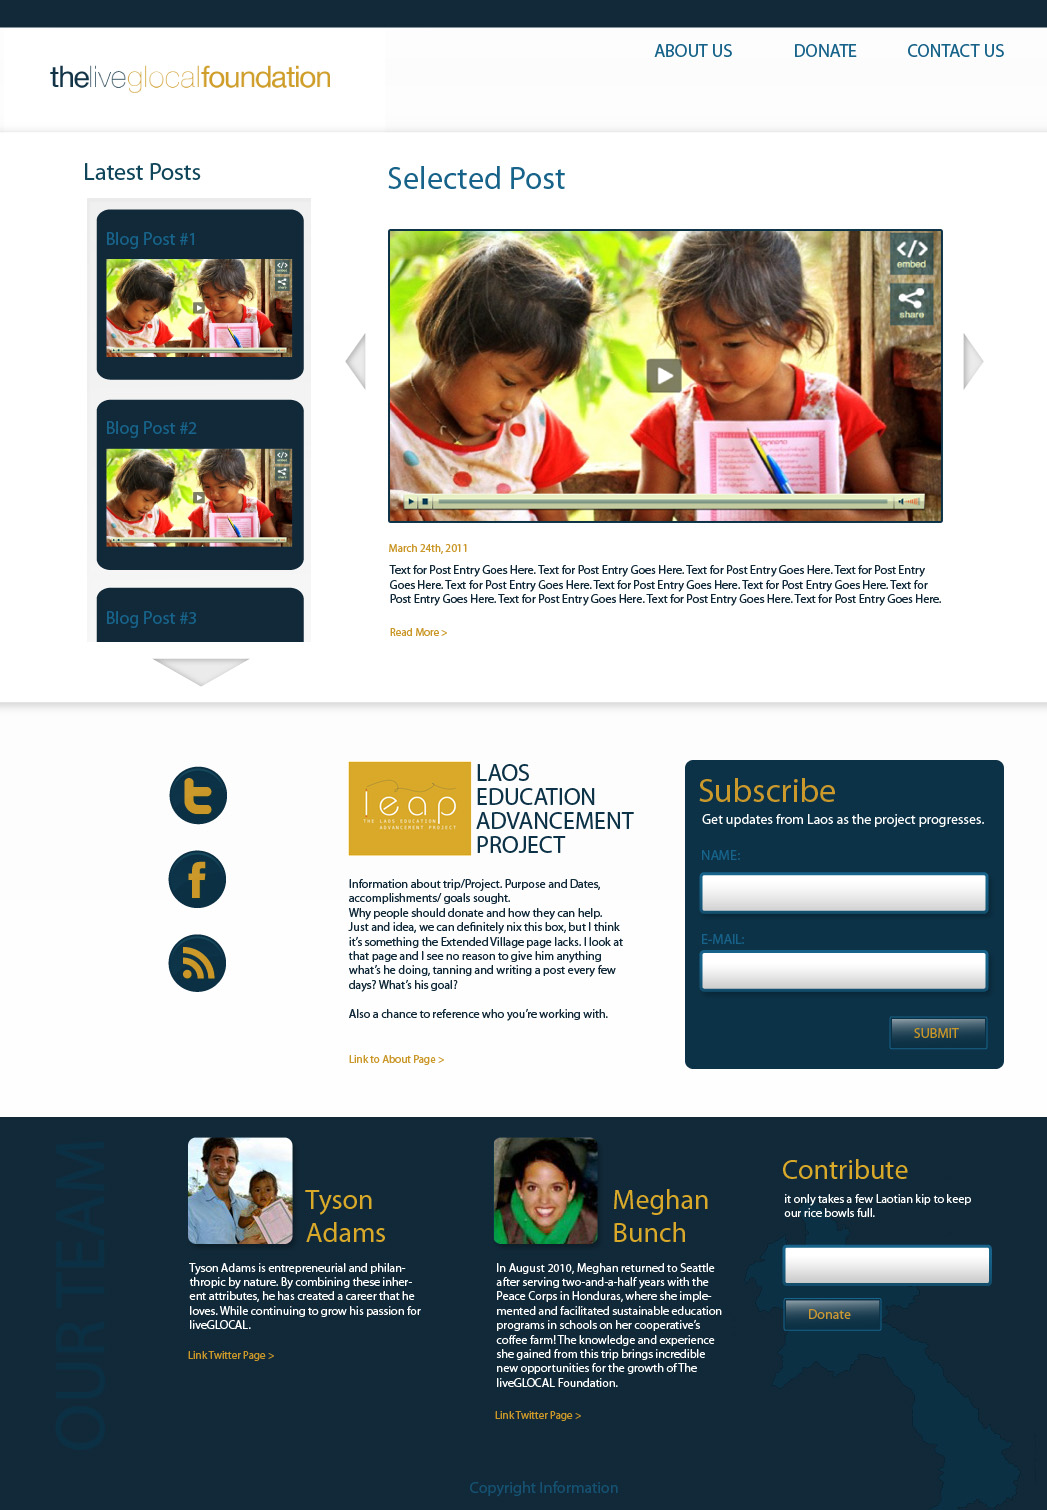 The LiveGlocal Foundation website design